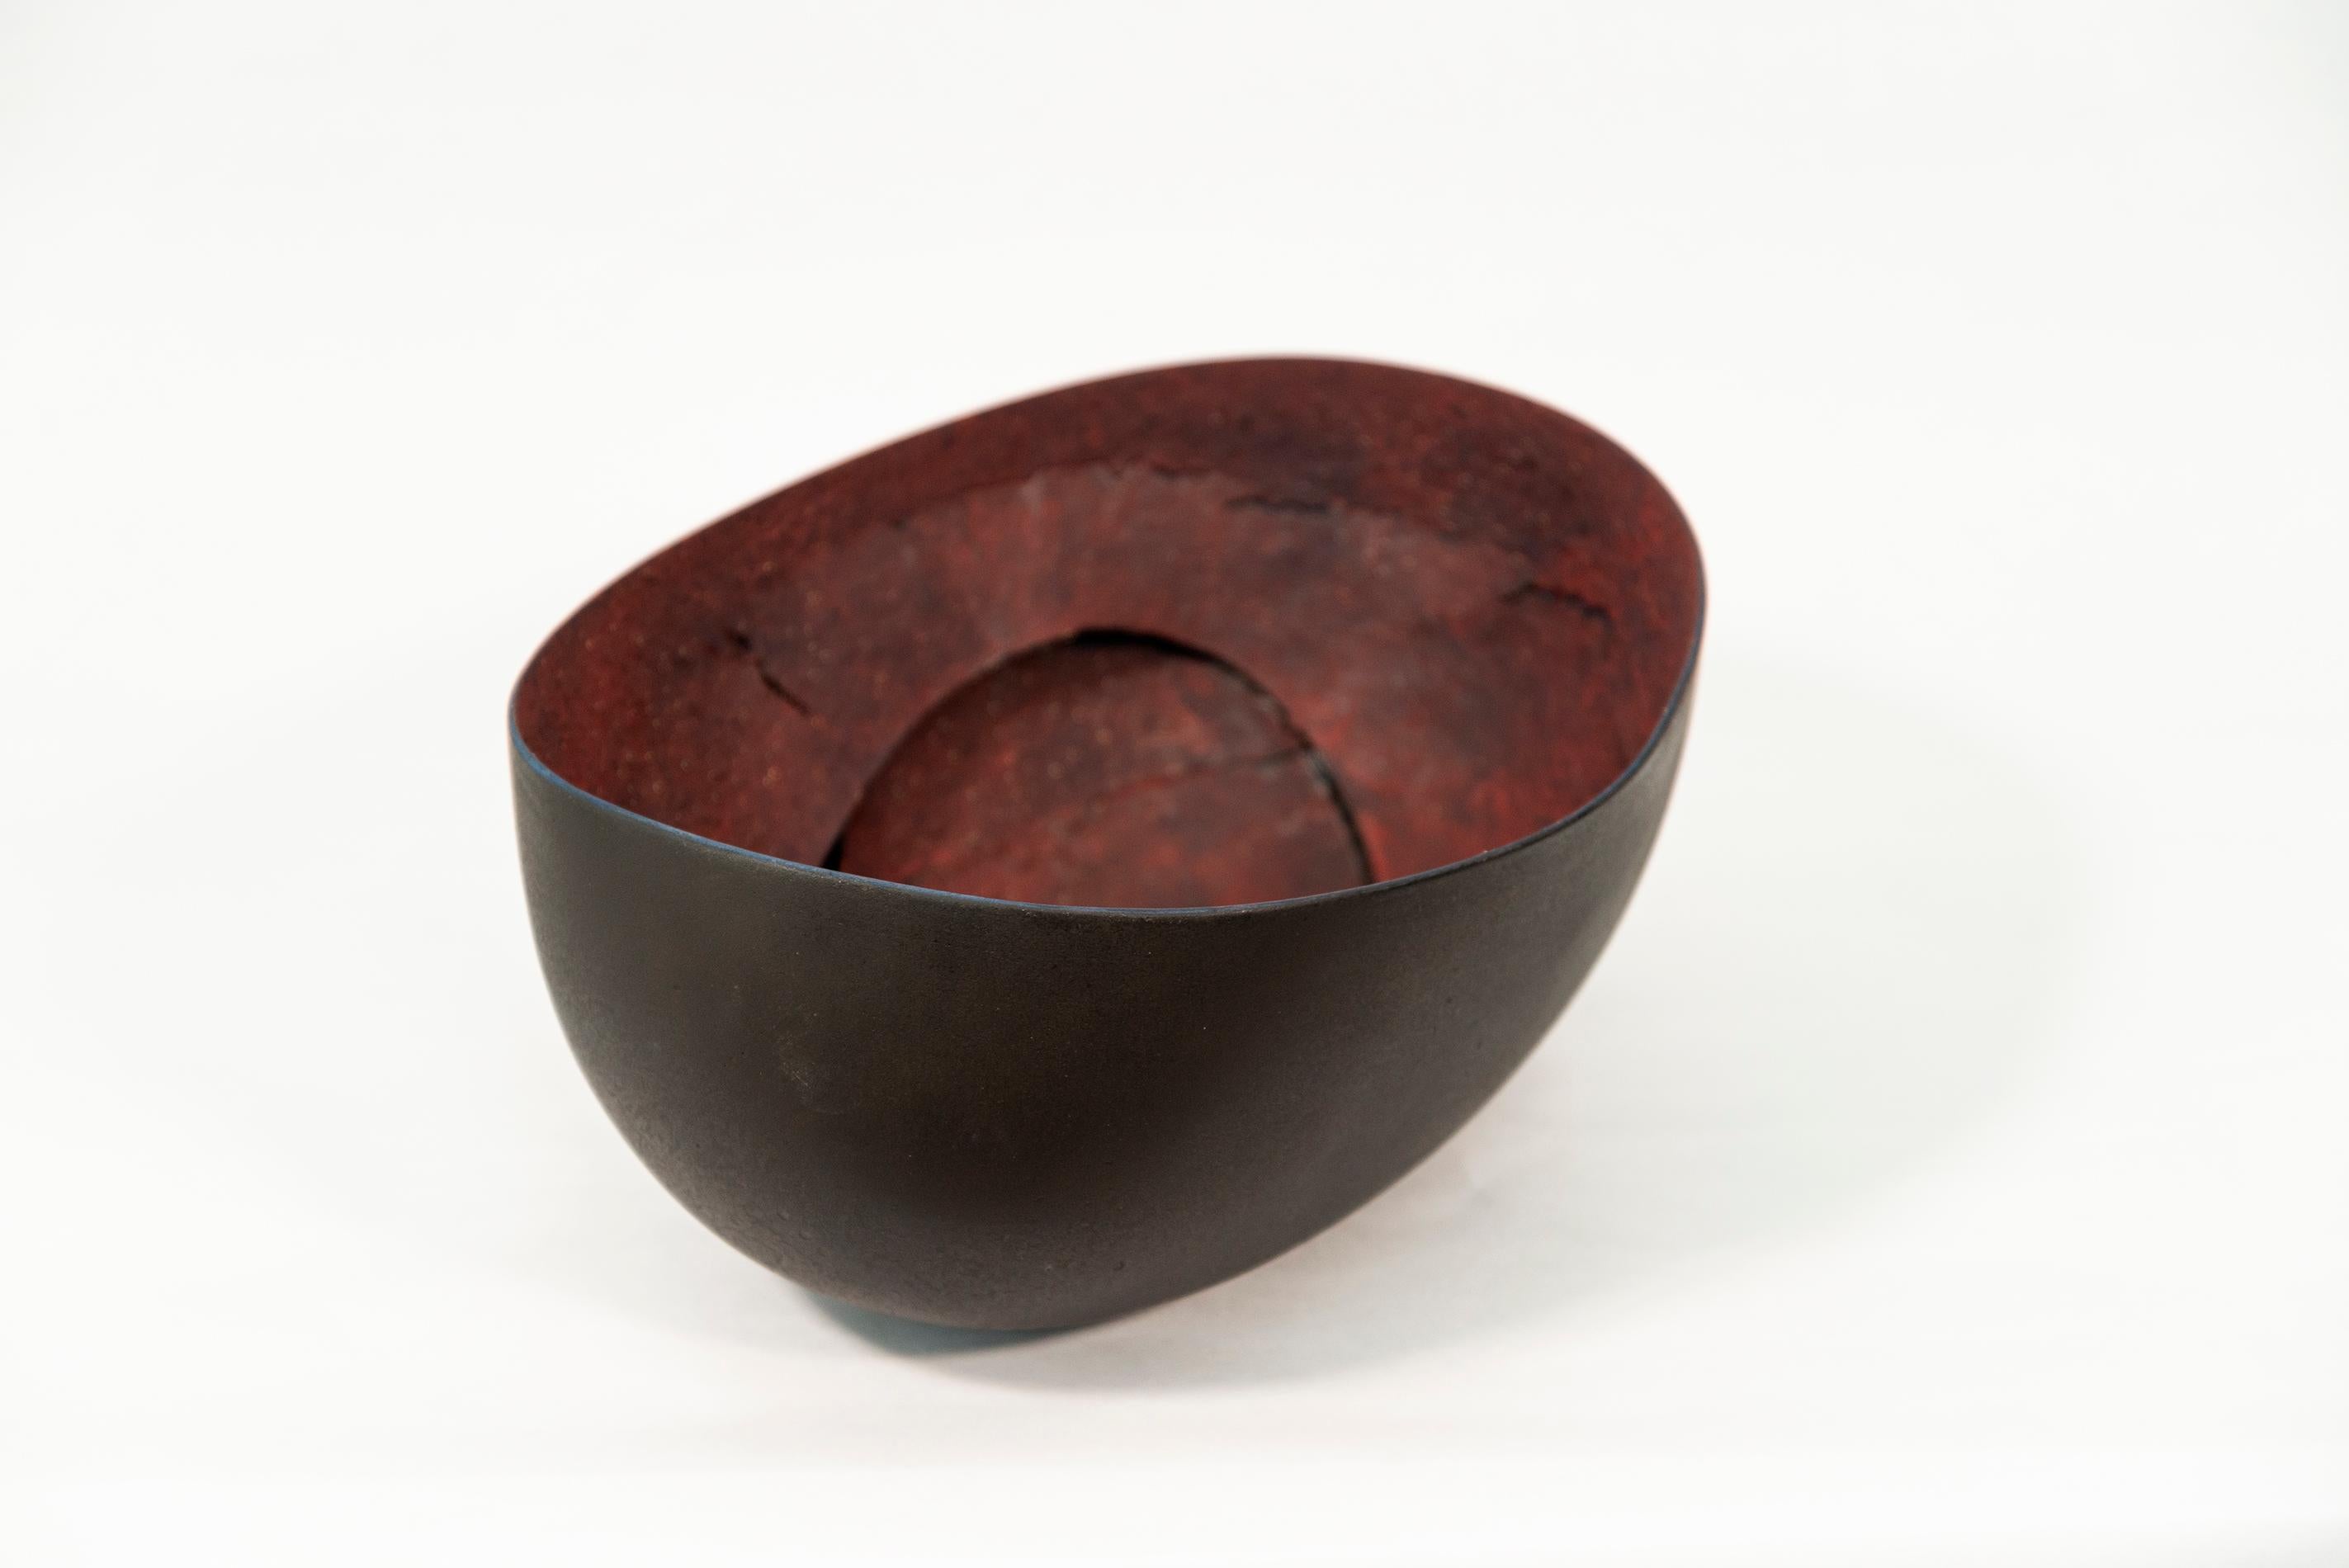 Untitled Bowl (Black) - black, red, nature inspired, textured, ceramic vessel - Contemporary Sculpture by Steven Heinemann